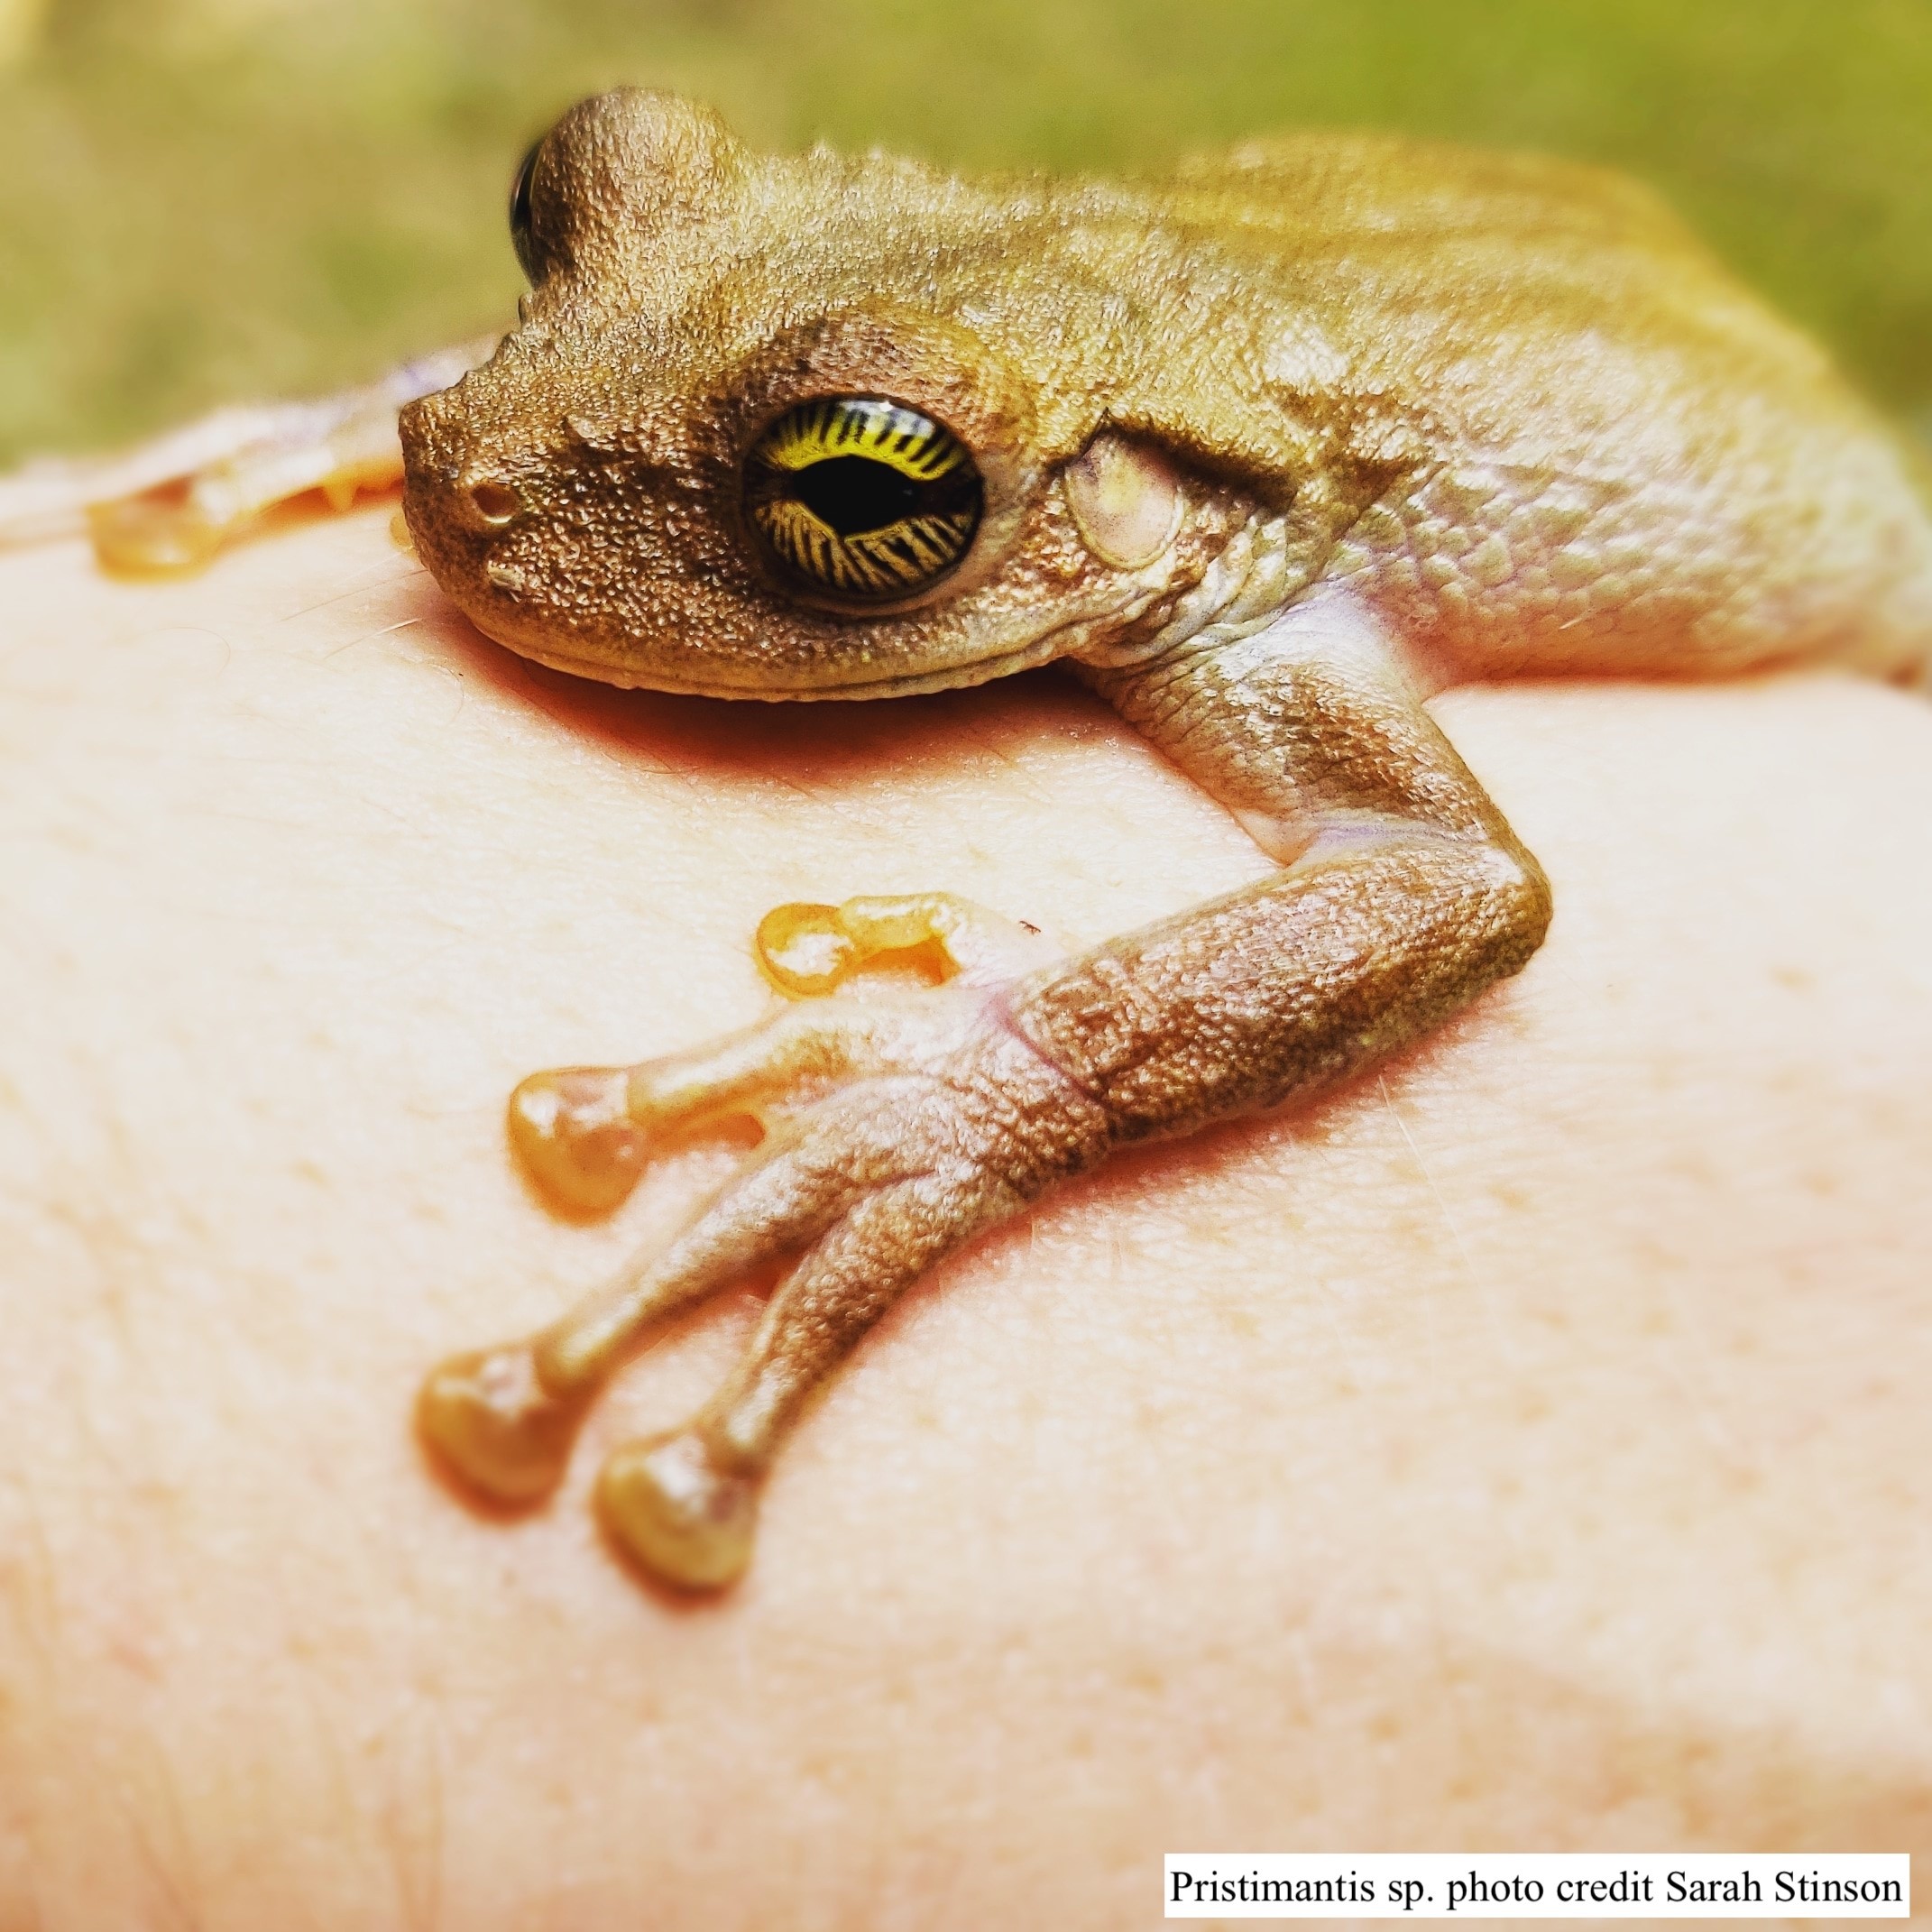 A close up photo of gecko on a human arm